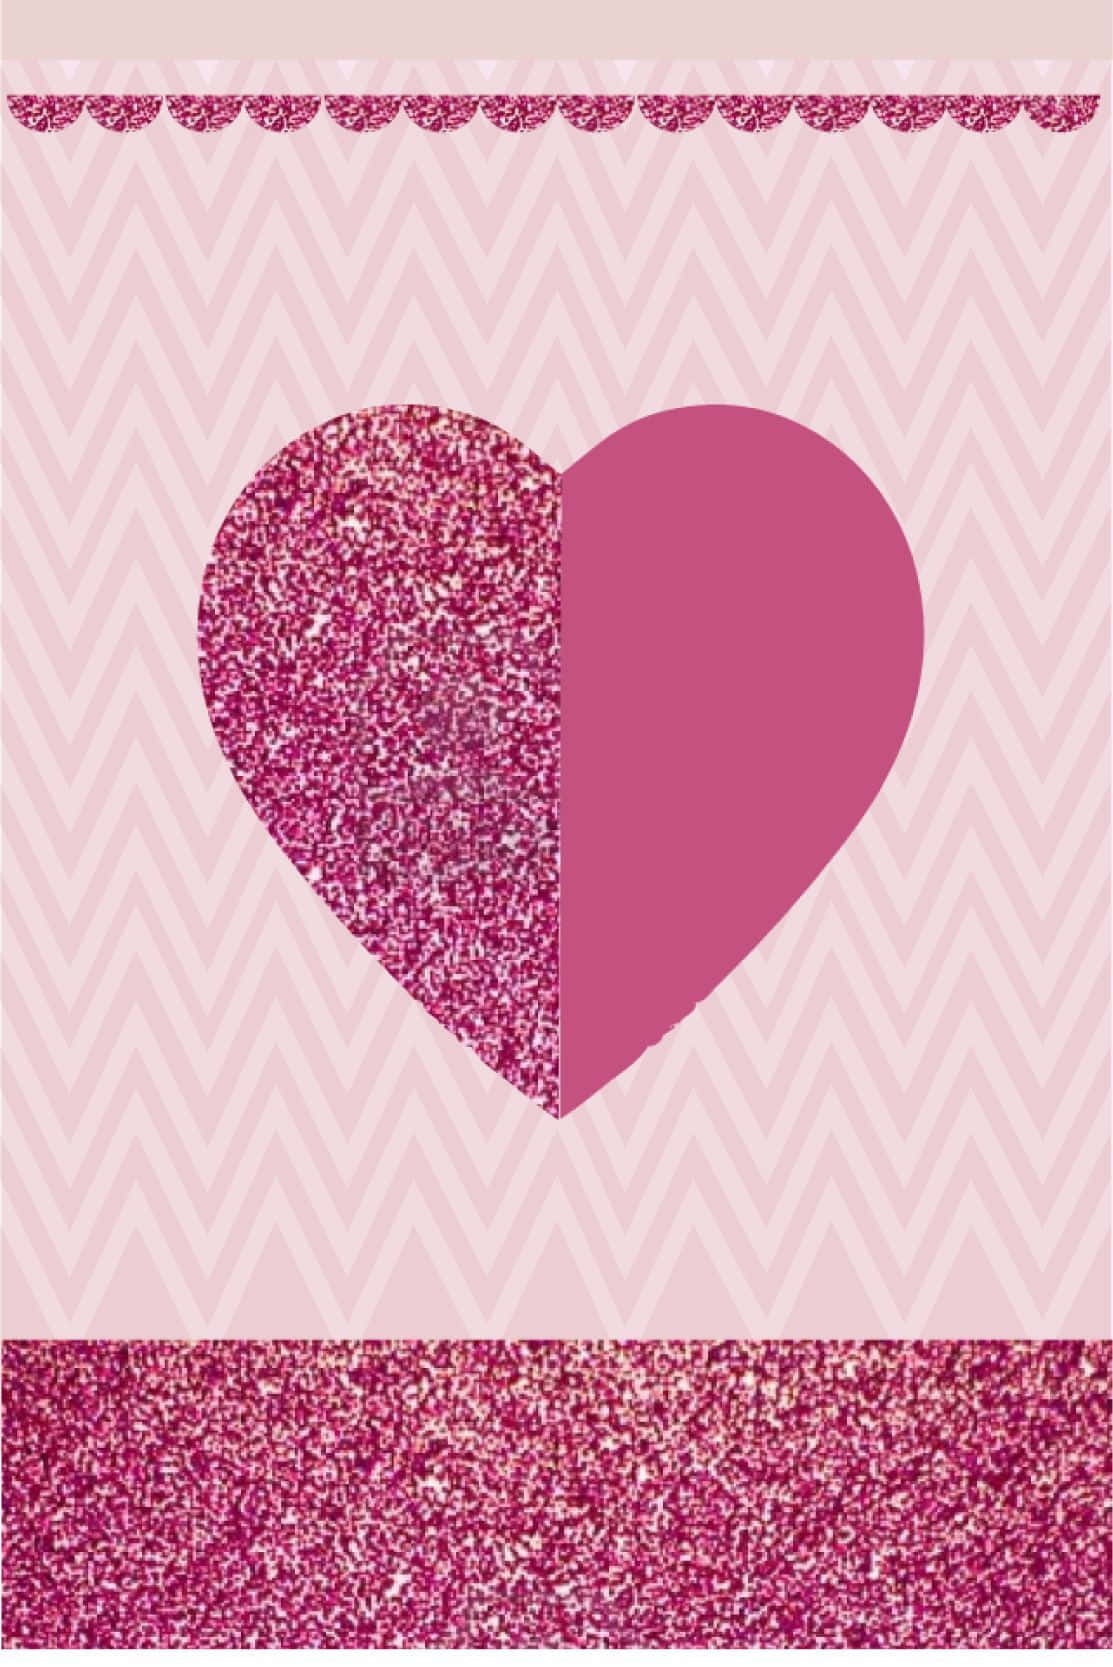 Glitter Pink Hearts Valentine's Card Wallpaper